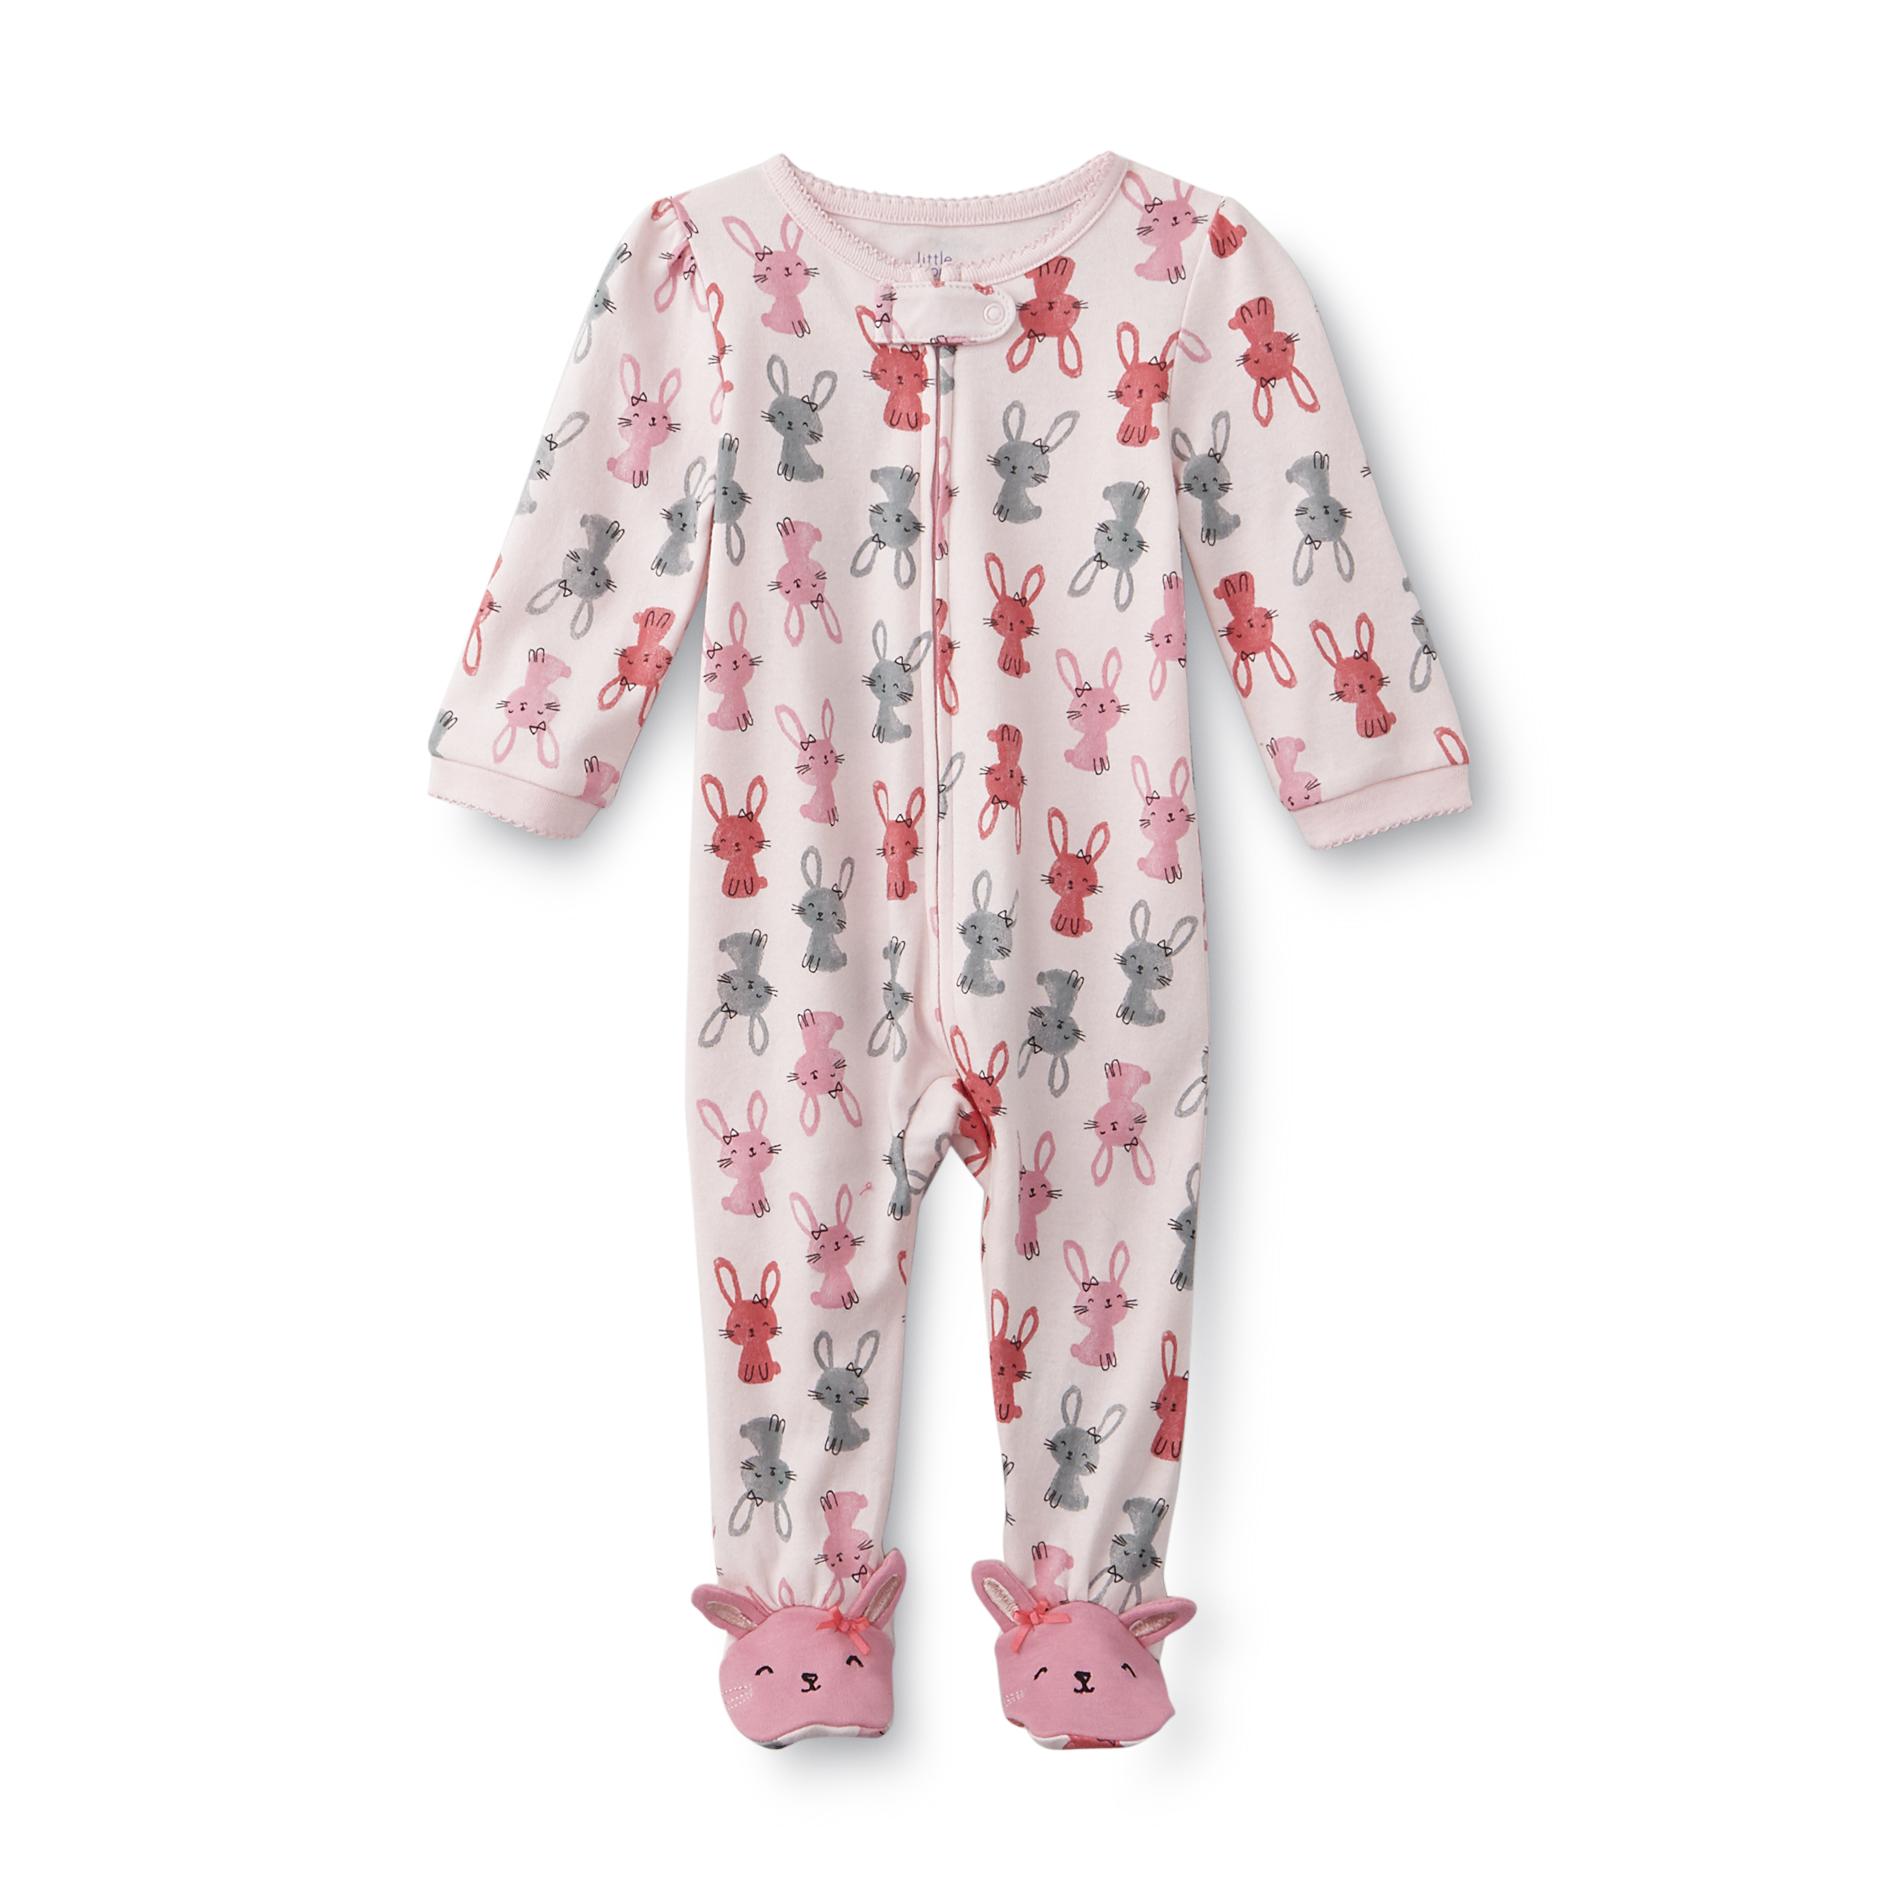 Little Wonders Newborn Girl's Footed Pajamas - Bunnies